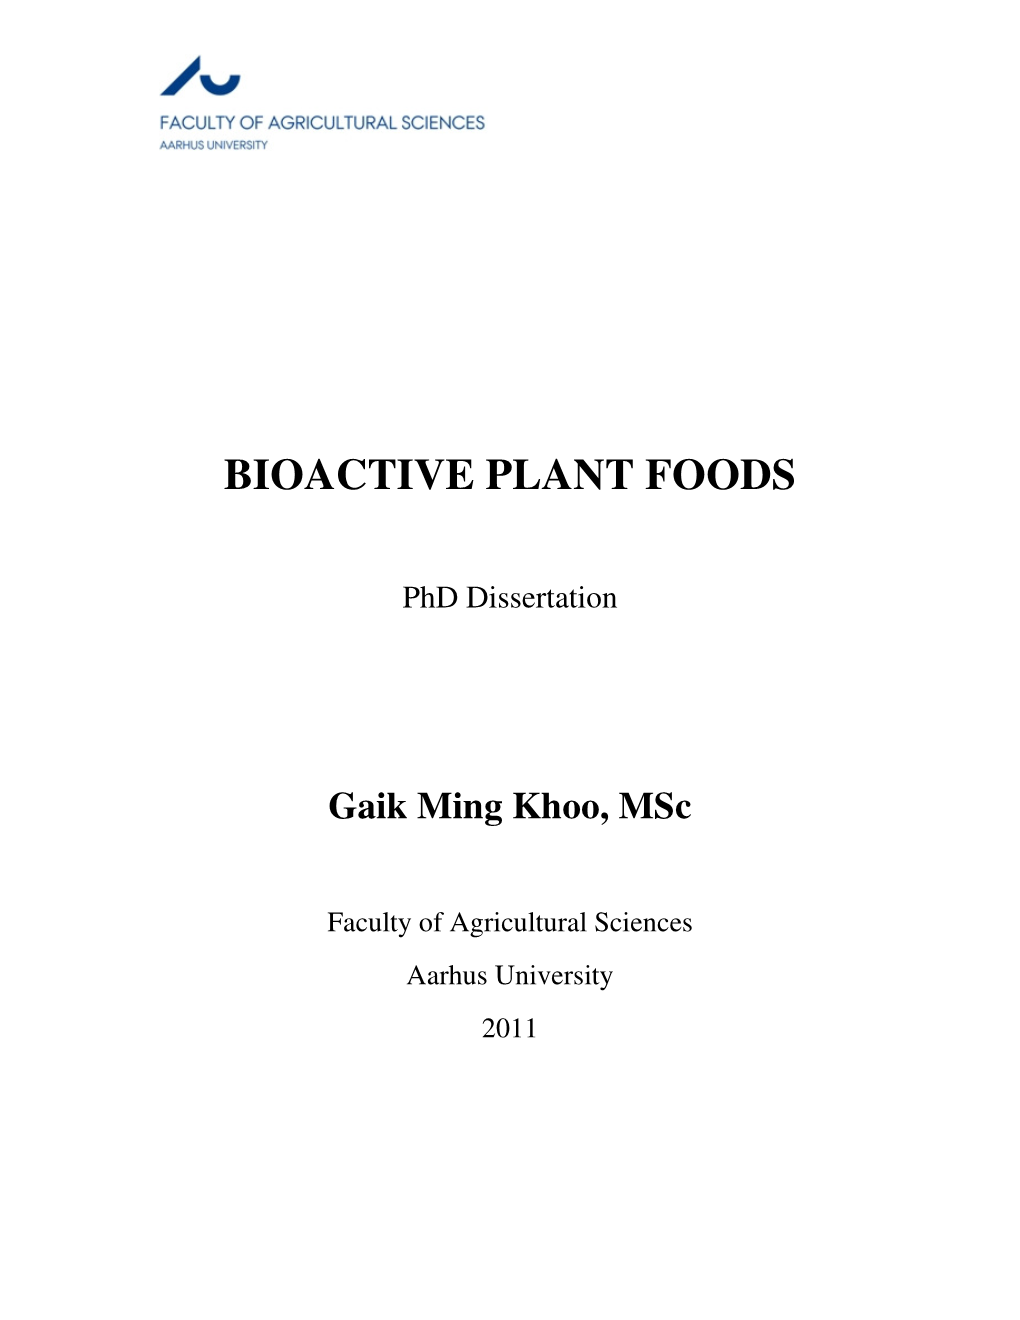 Bioactive Plant Foods